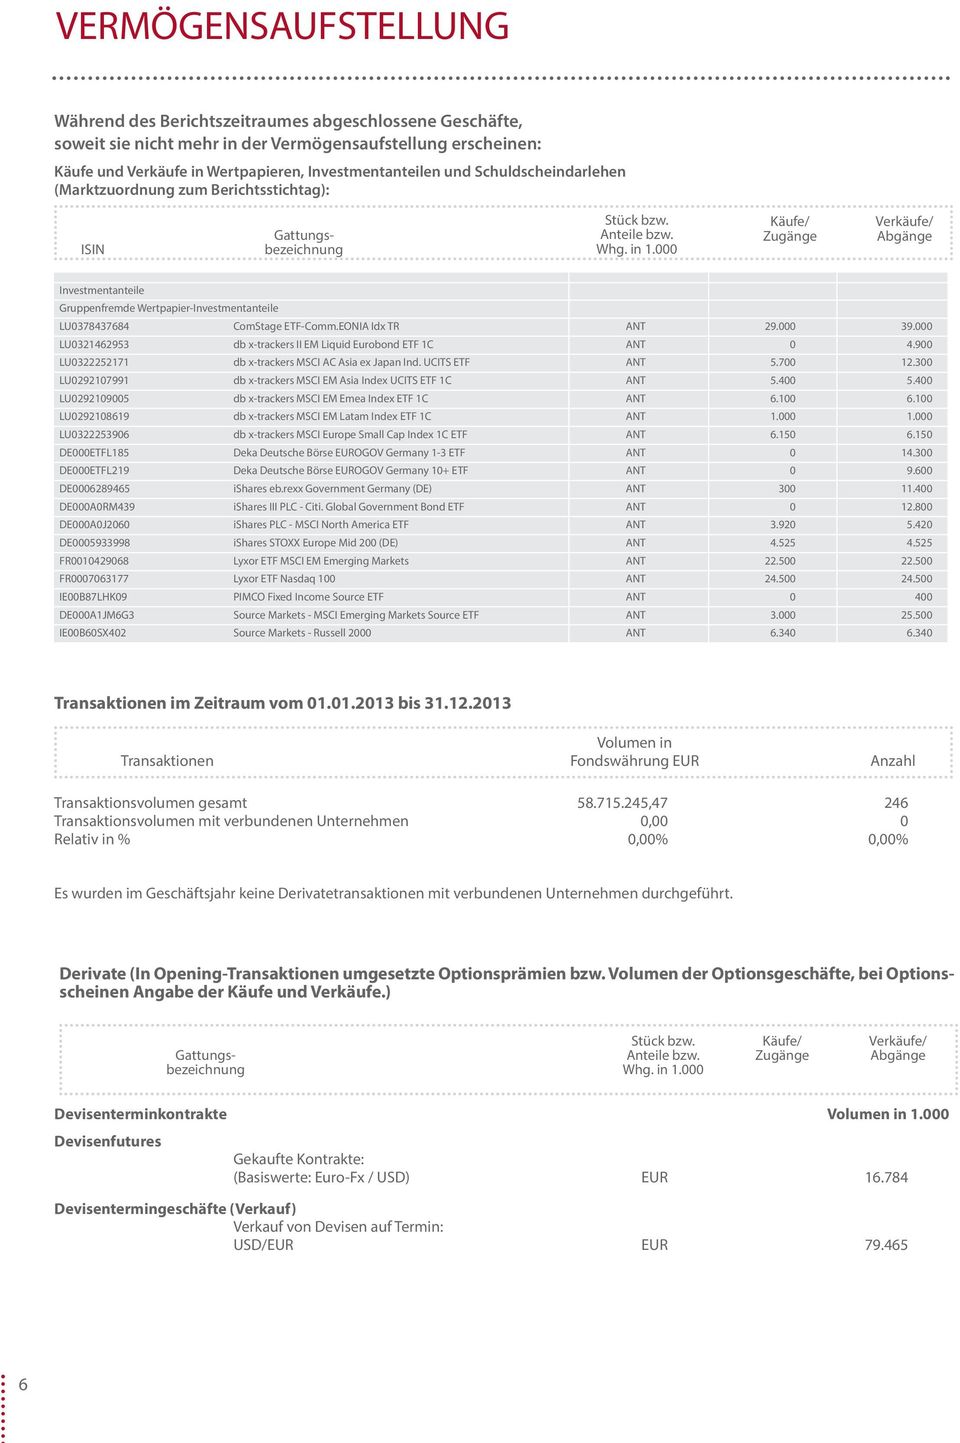 000 Käufe/ Zugänge Verkäufe/ abgänge investmentanteile Gruppenfremde Wertpapier-investmentanteile LU0378437684 comstage etf-comm.eonia idx tr ant 29.000 39.